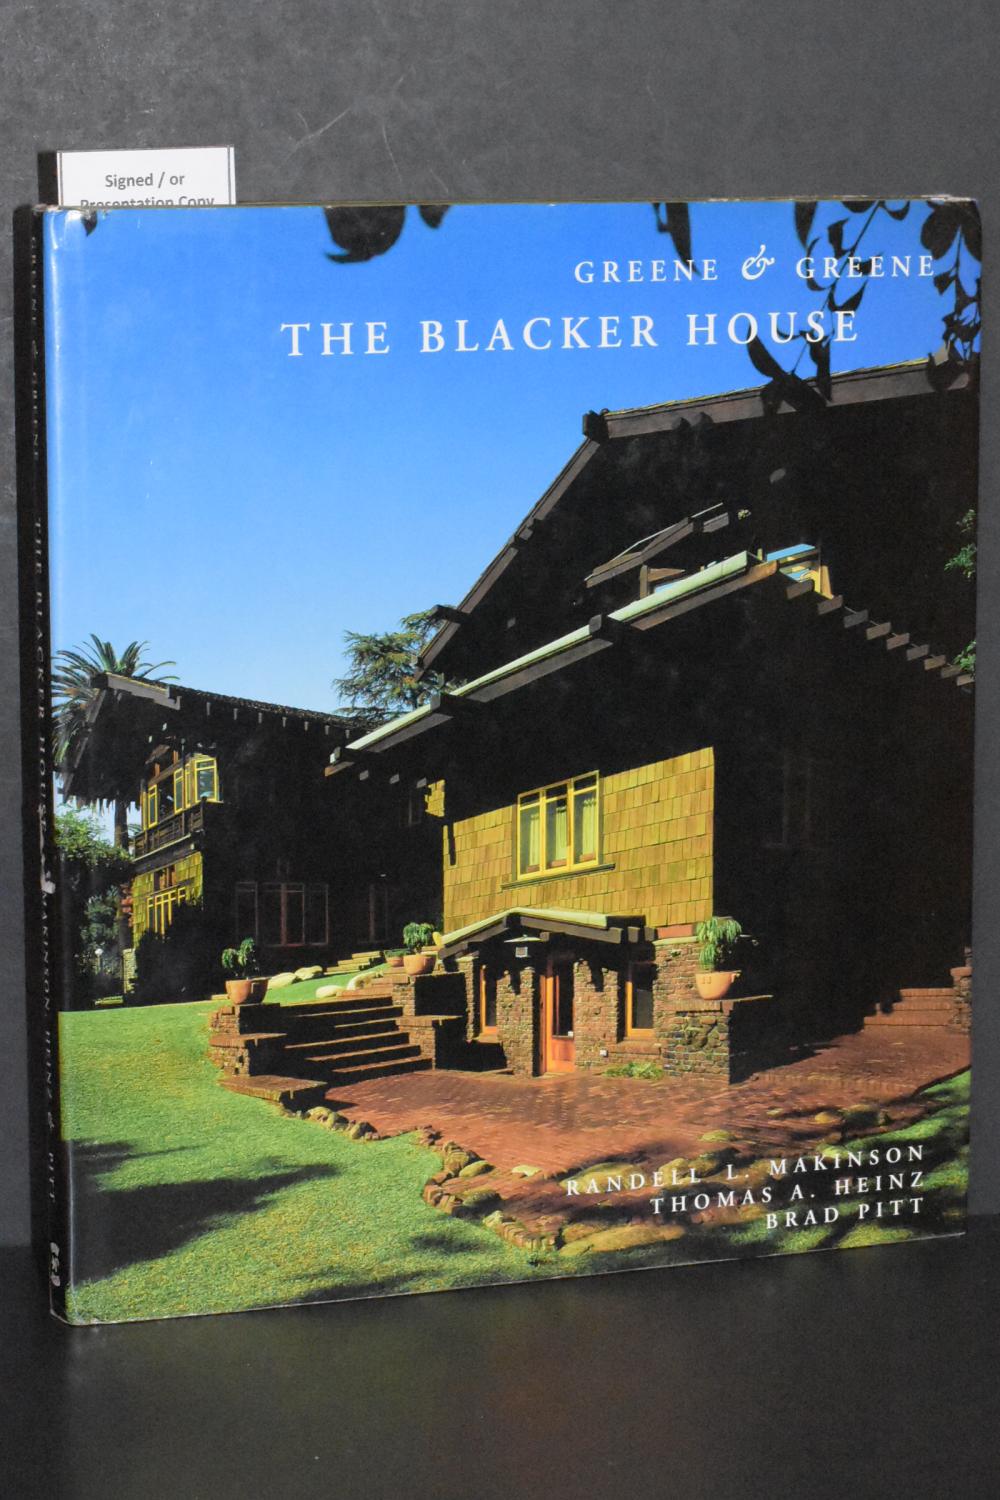 Greene & Greene; The Blacker House - Randell L. Makinson, Thomas A. Heinz, Brad Pitt (ALL AUTHORS SIGNED)